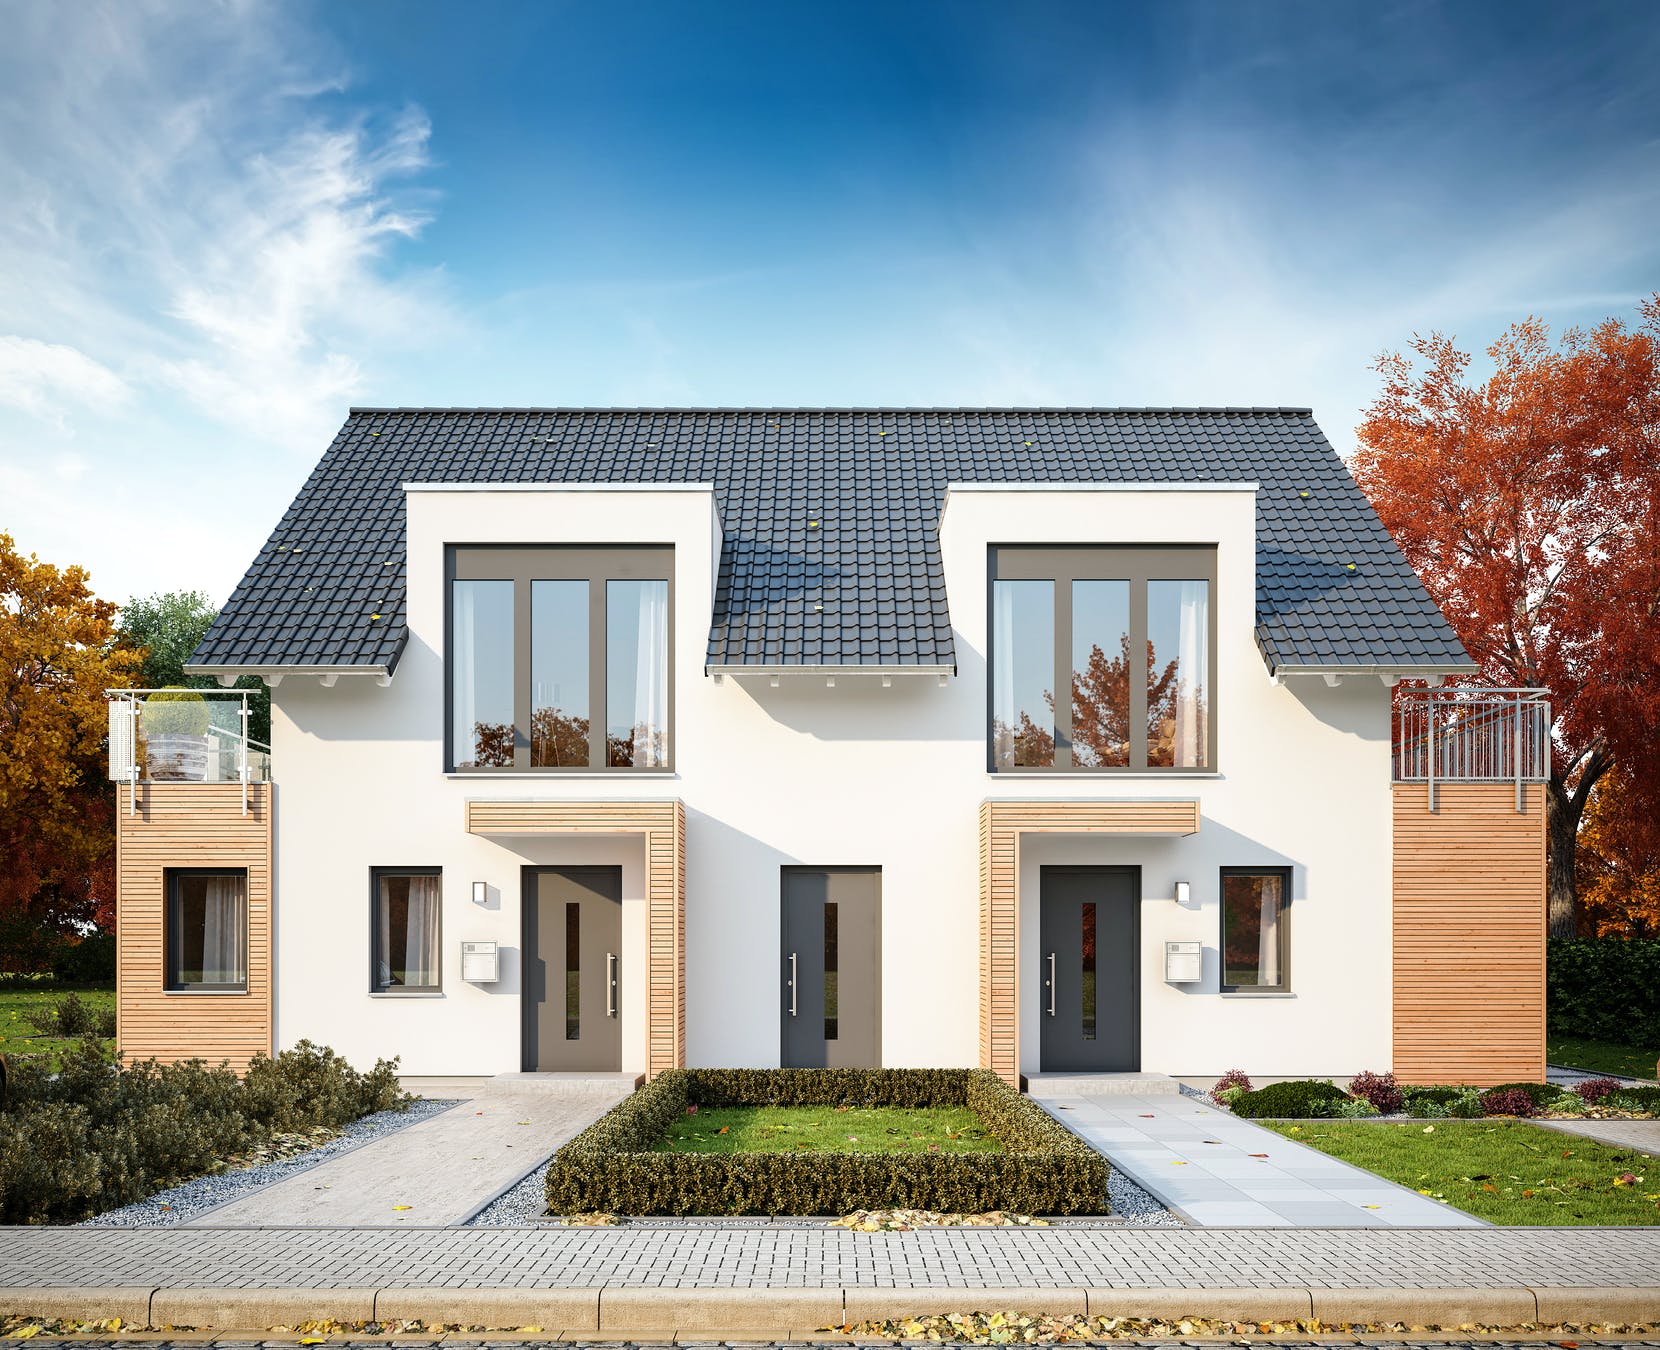 Doppelhaus bauen - Viele Kosten teilen | Fertighaus.de